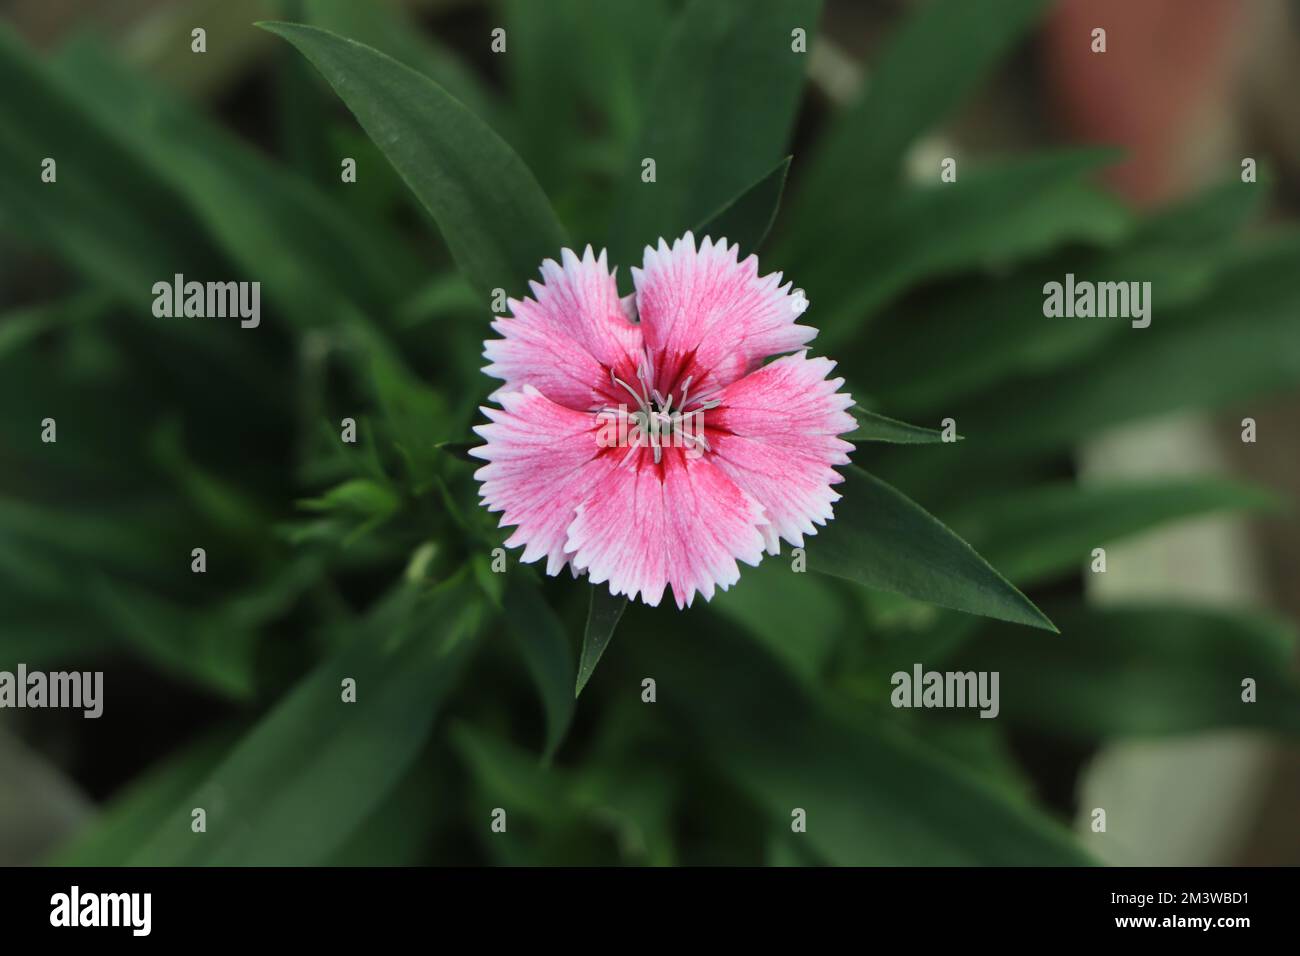 Dianthus gratianopolitanus or cheddar pink flowers Stock Photo